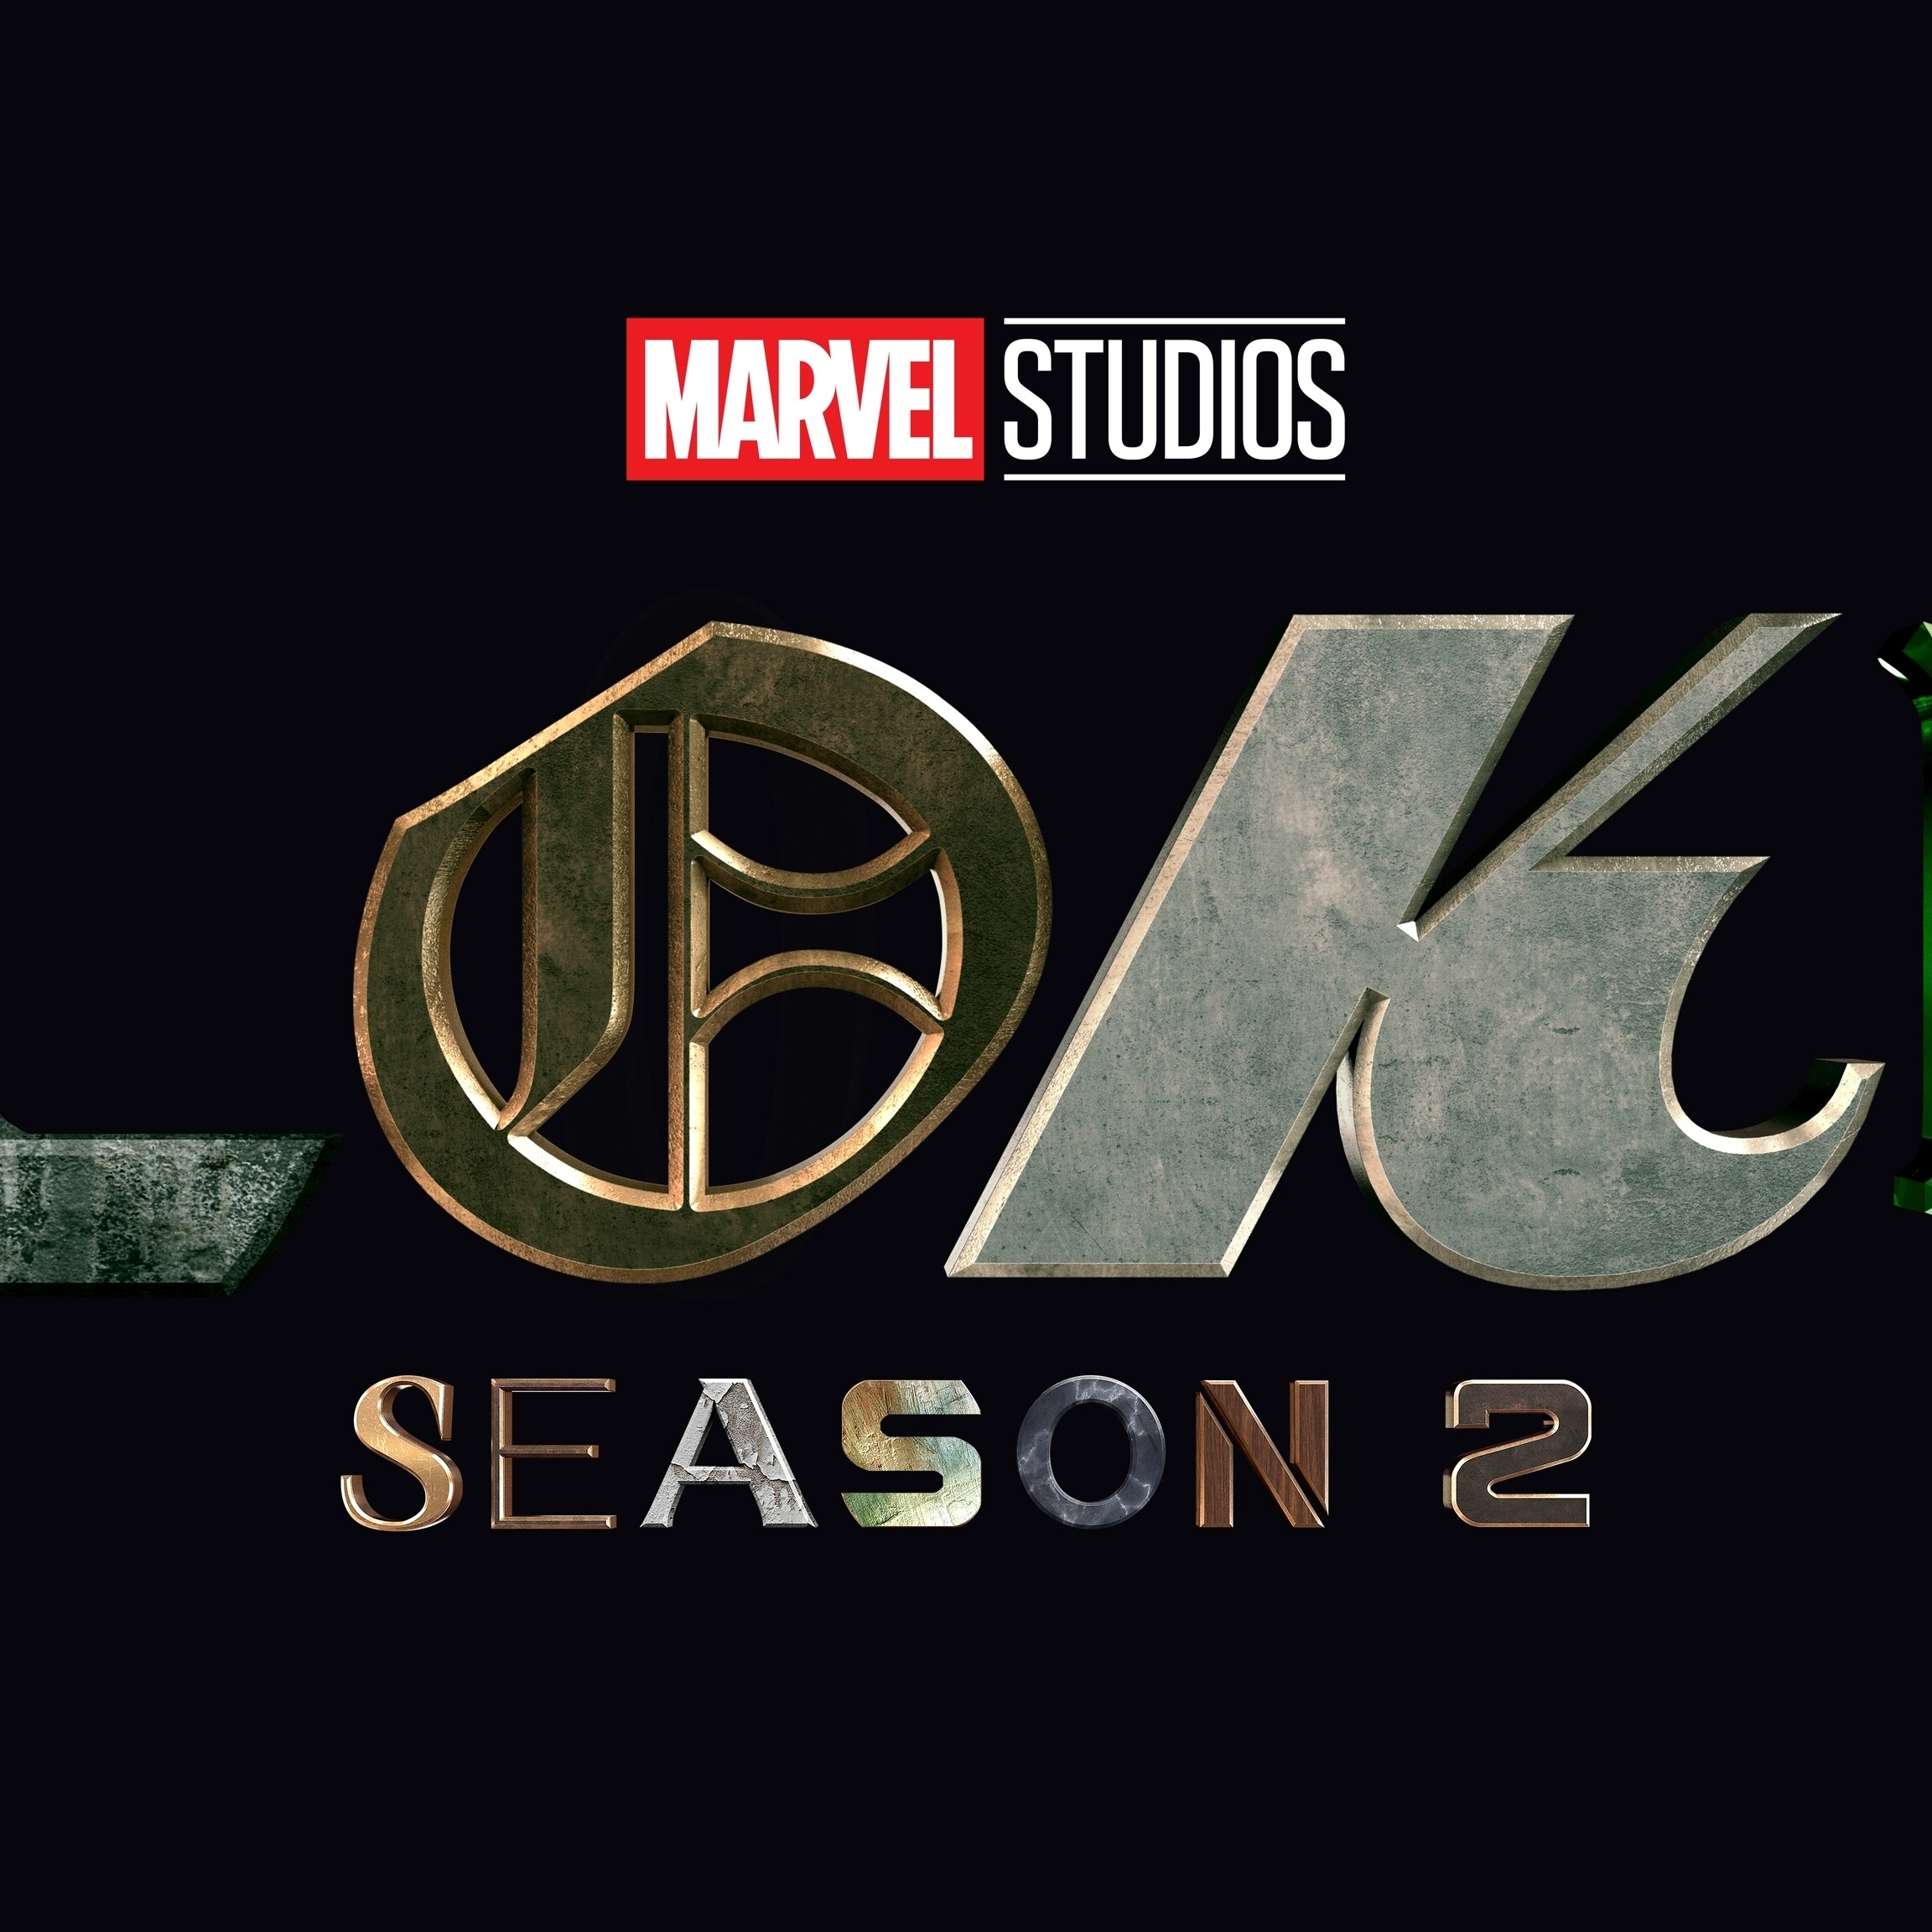 THE NEW TRAILER FOR LOKI SEASON 2 LOOKS AMAZING! Loki 2 Trailer Review 